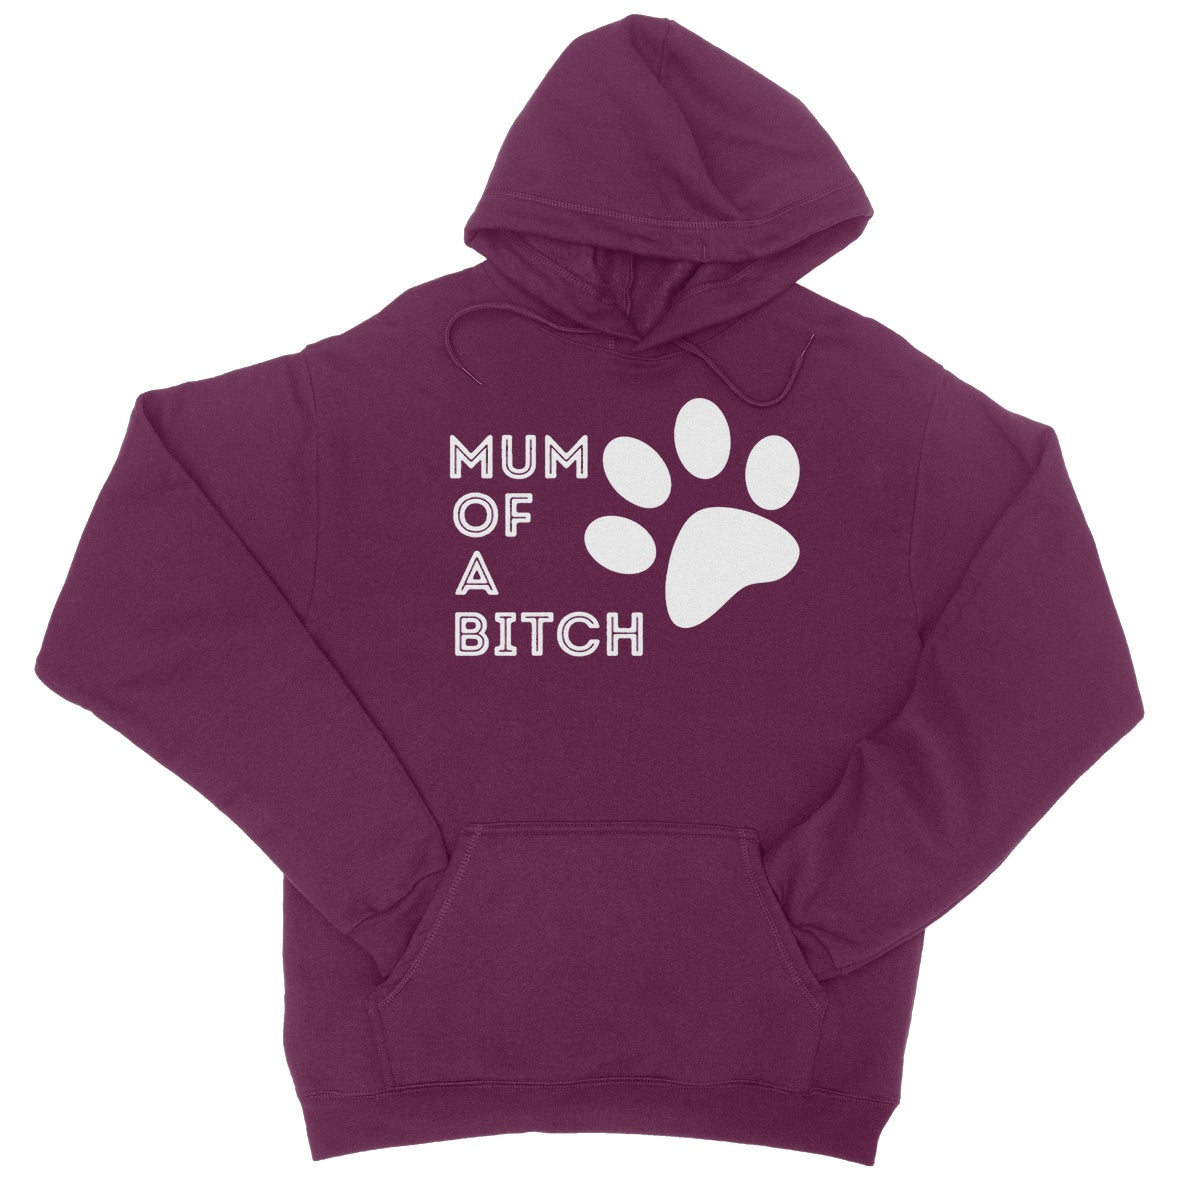 mum of a bitch hoodie purple